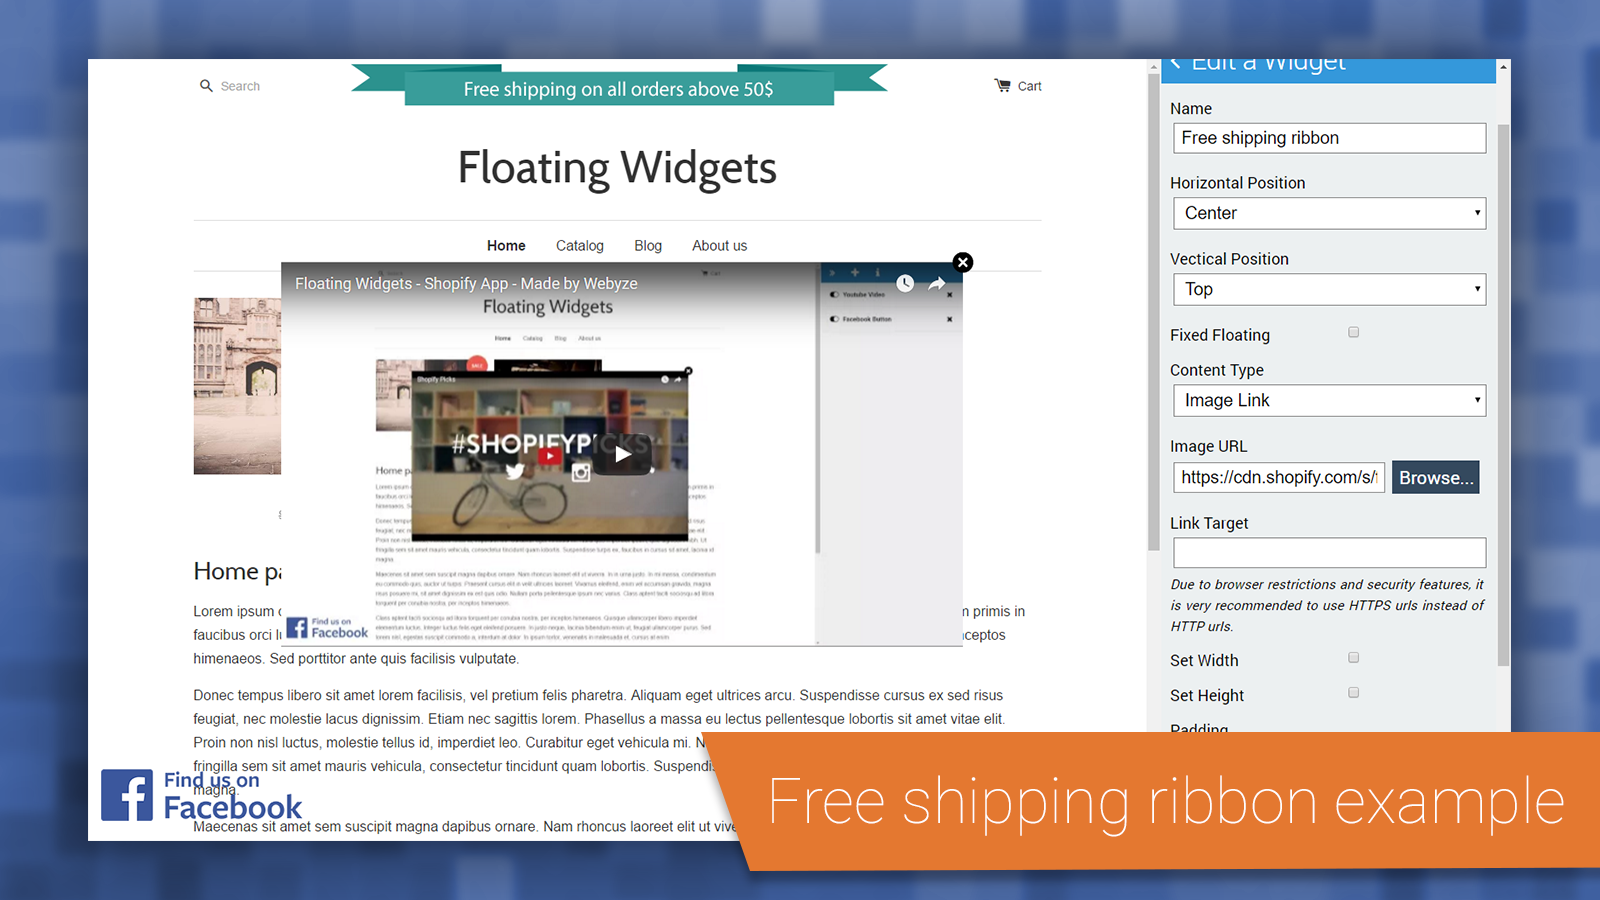 Free shipping ribbon example